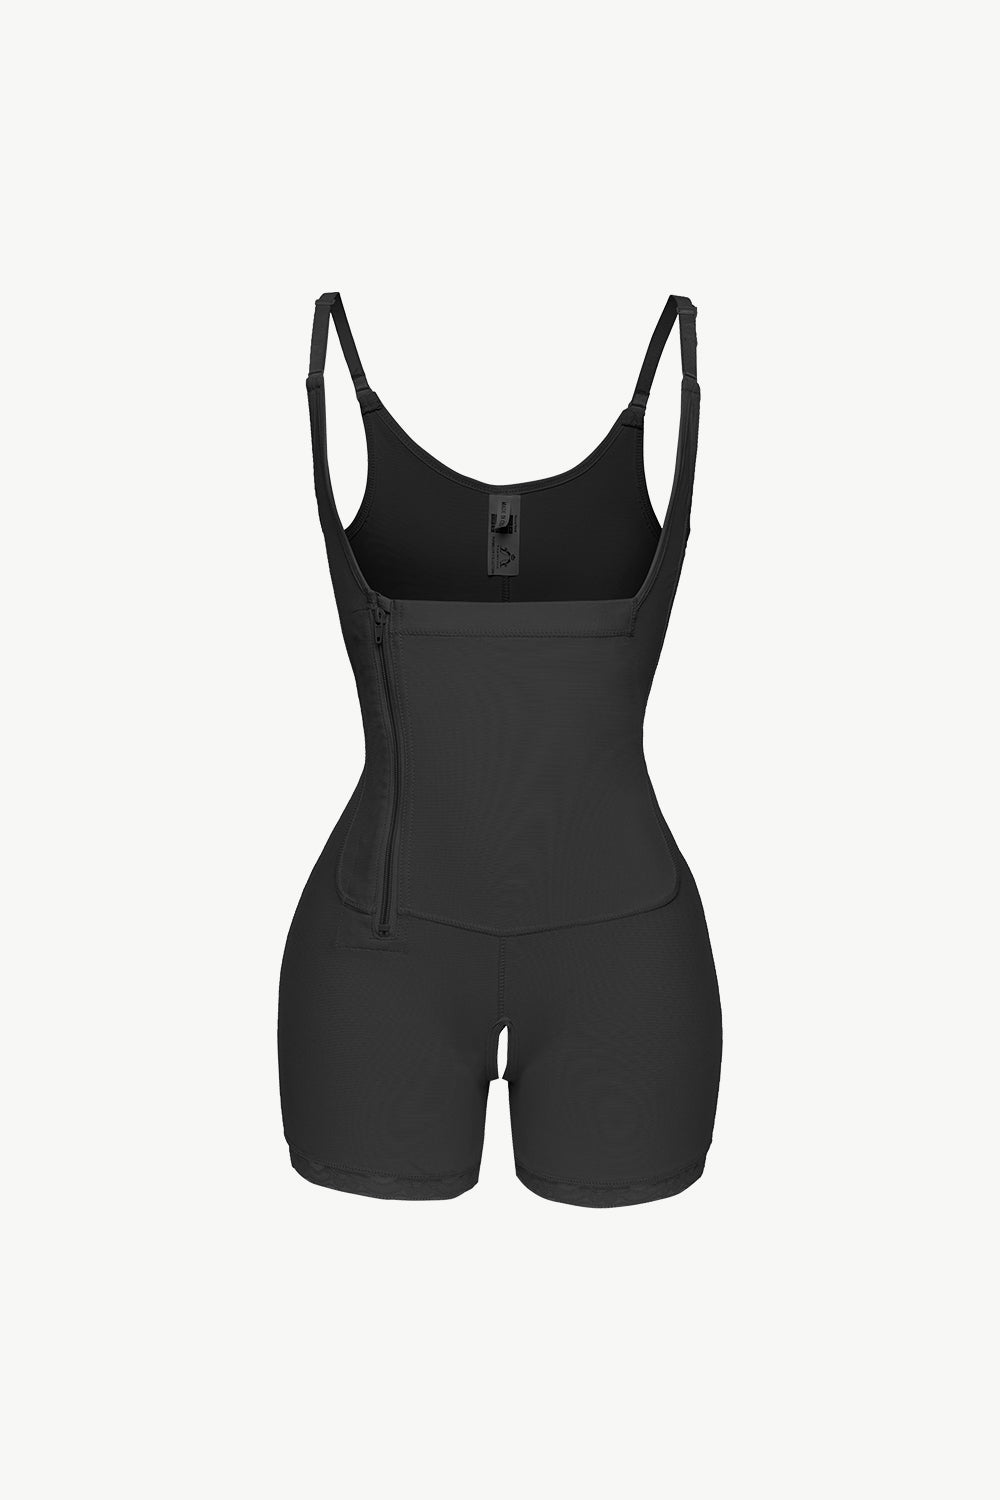 Full Size Side Zipper Under-Bust Shaping Bodysuit-TOPS / DRESSES-[Adult]-[Female]-Black-S-Blue Zone Planet